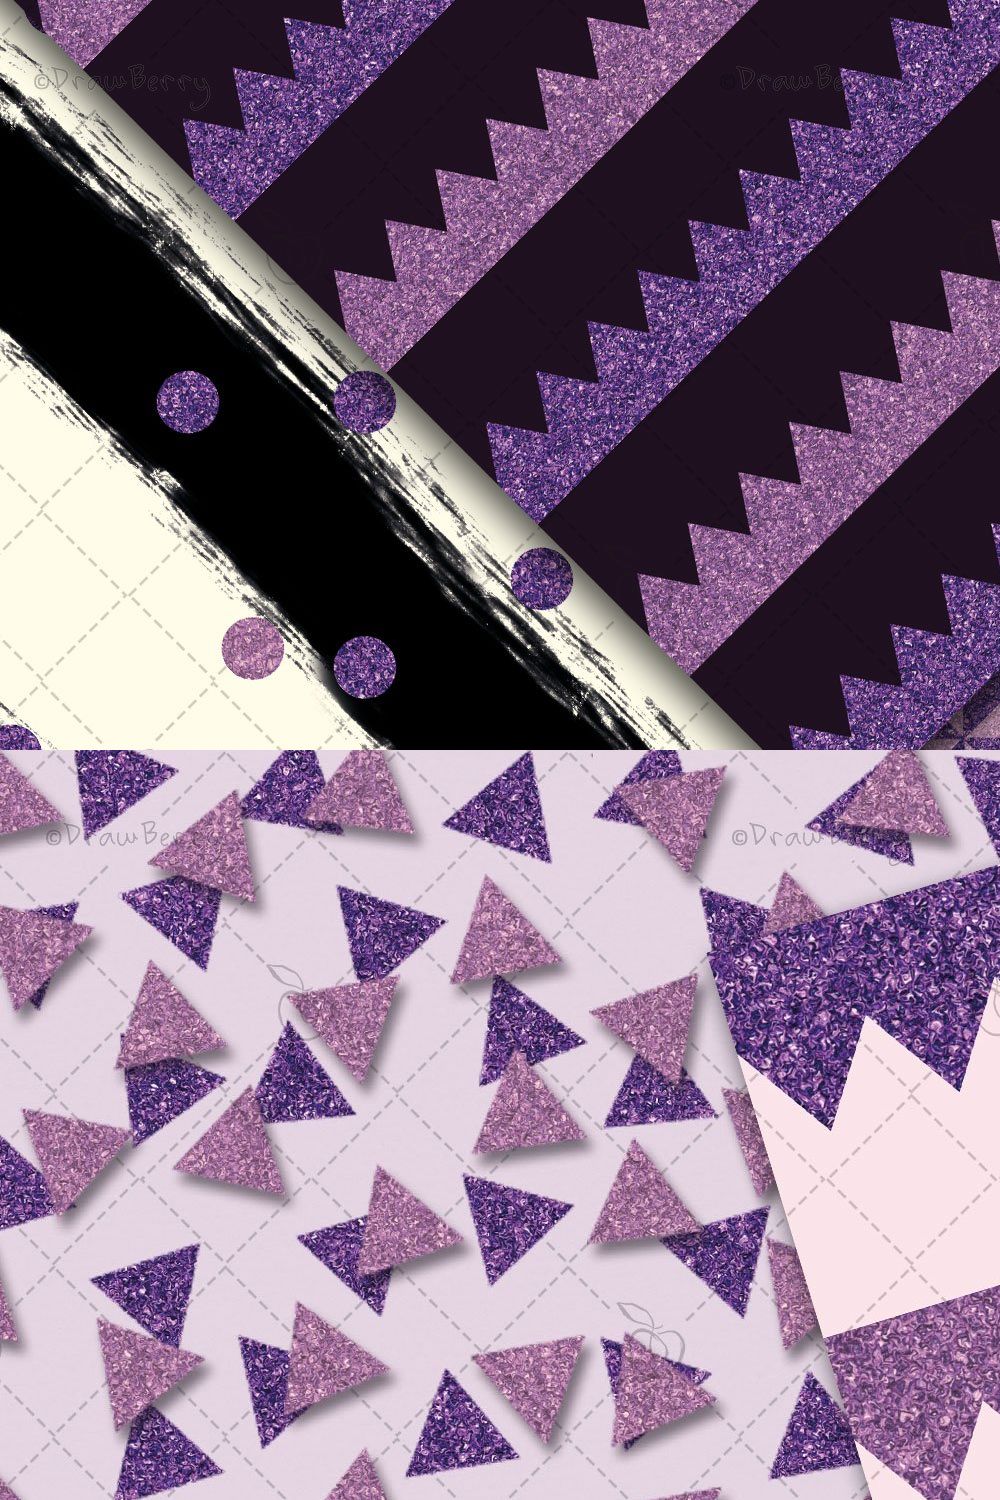 Purple Glitter Digital Paper xo pinterest preview image.